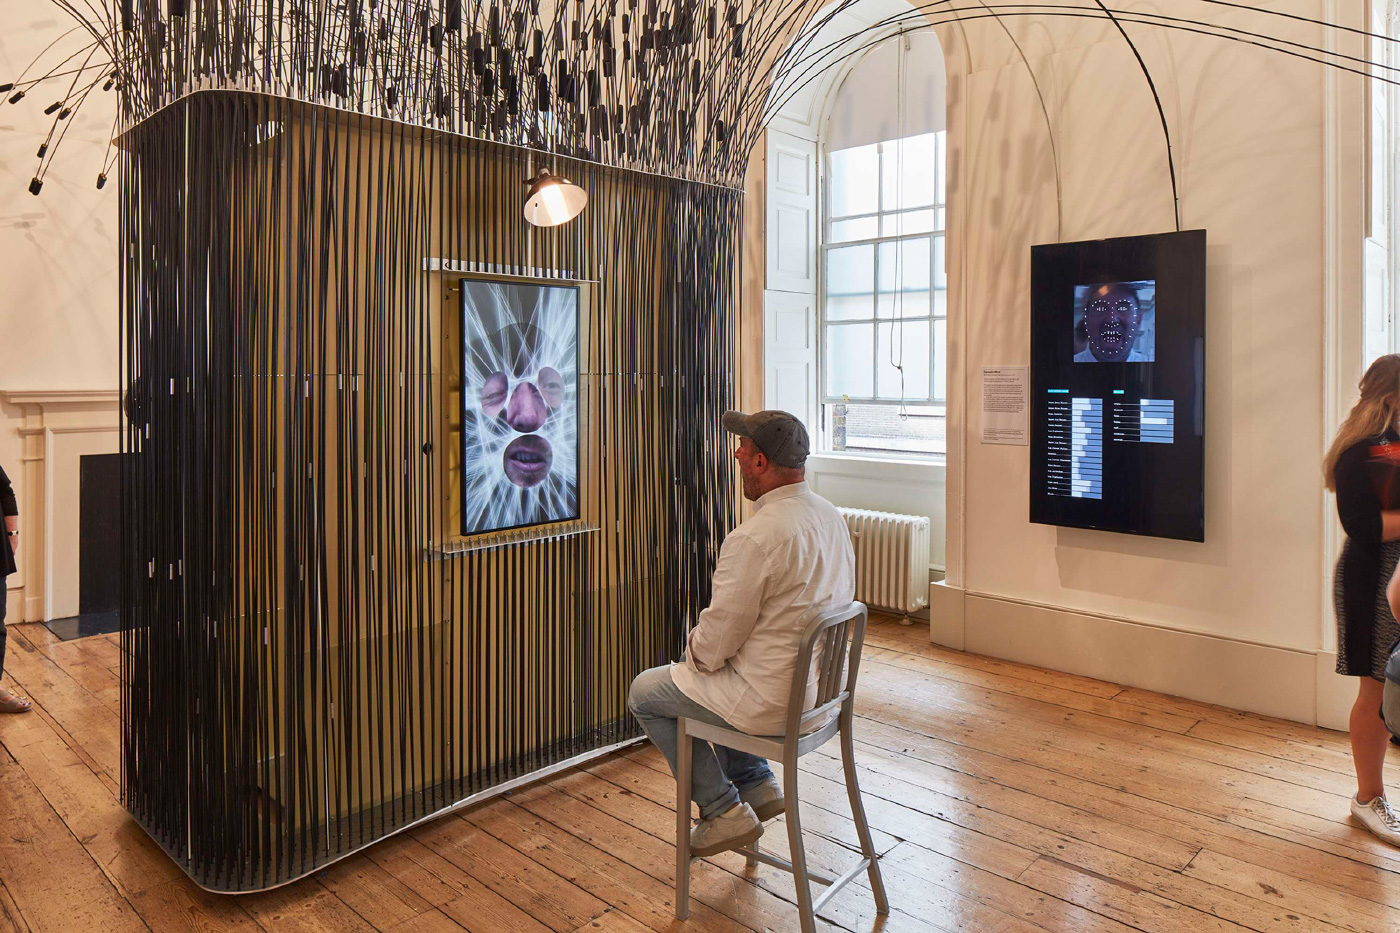 An installationan at the London Design Biennale